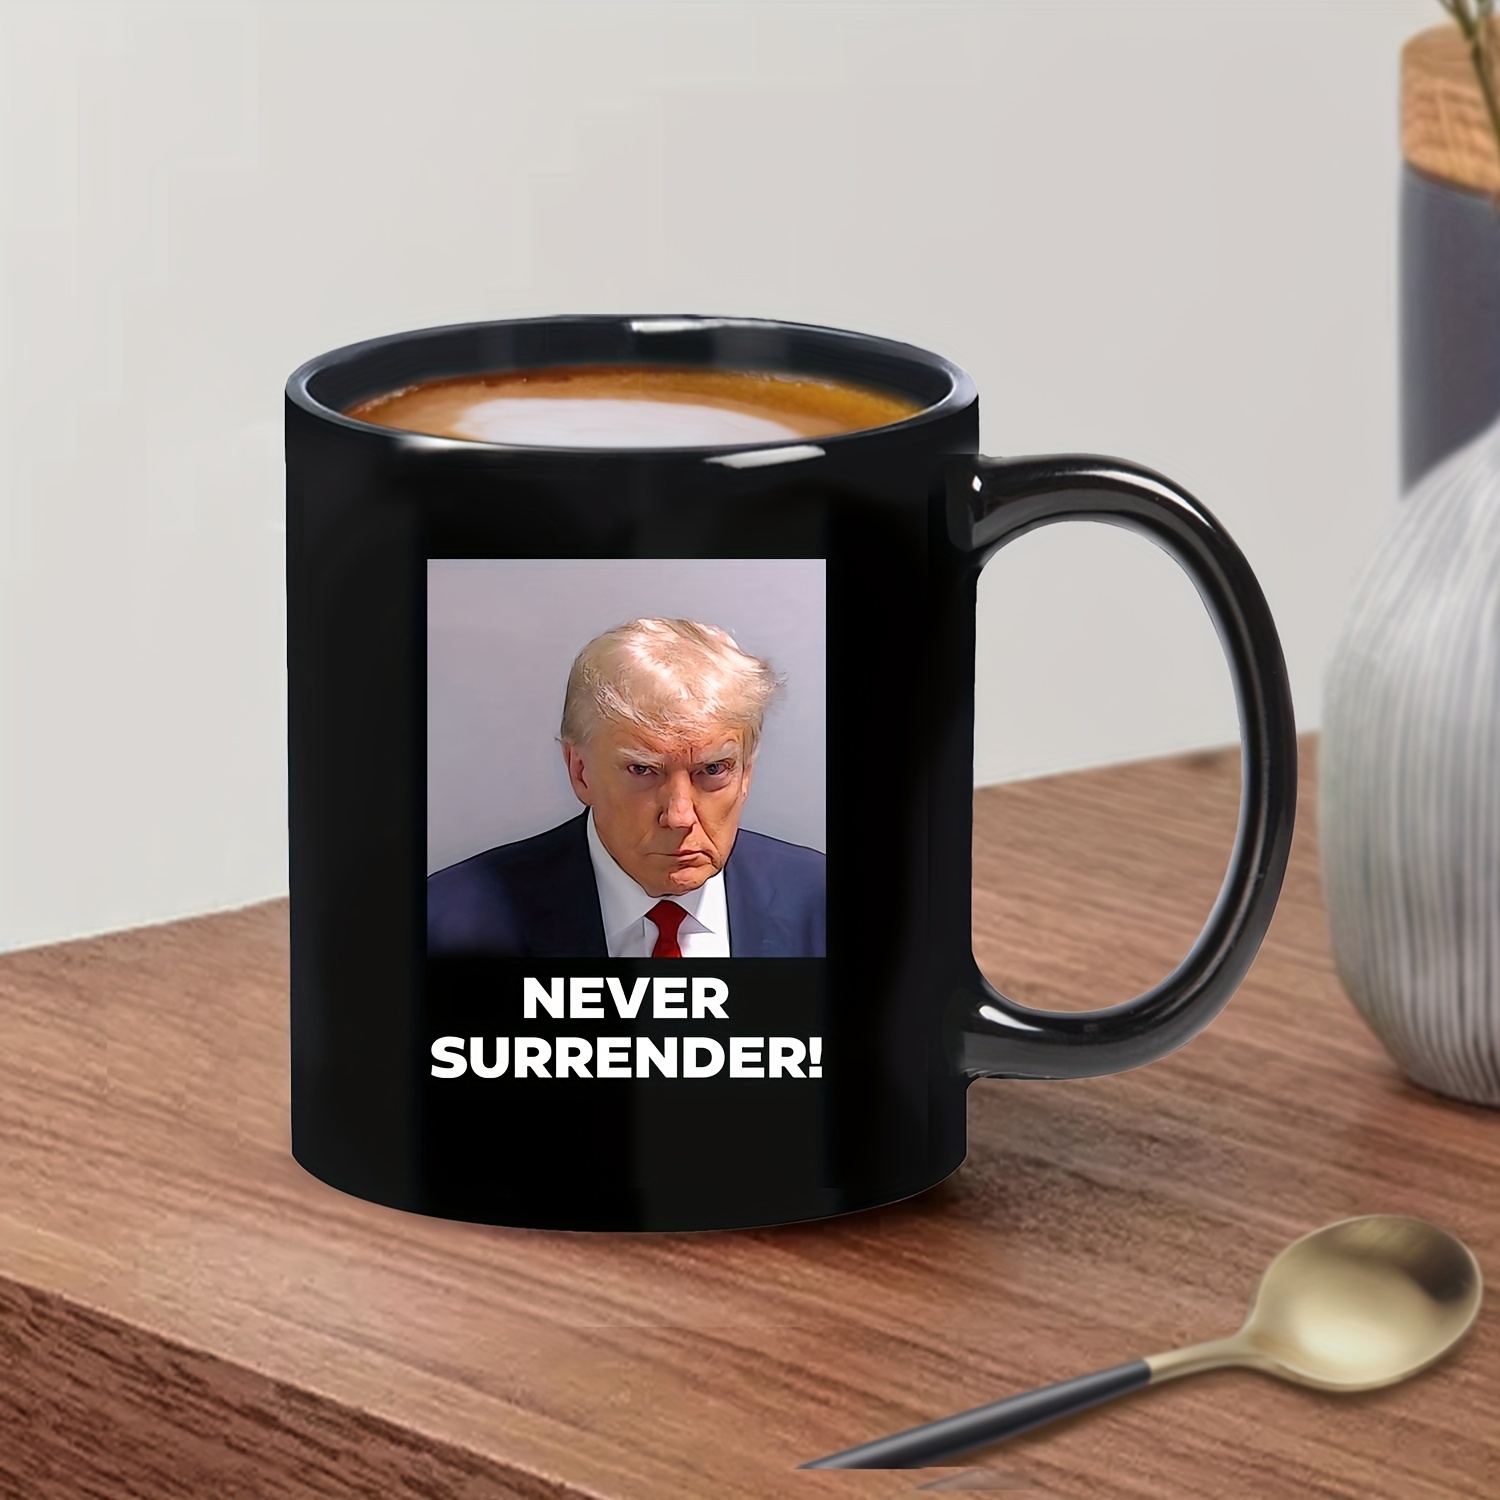 GRAPHICS & MORE Trump Mugshot Guilty Ceramic Coffee Mug, Novelty Gift Mugs  for Coffee, Tea and Hot Drinks, 11oz, White